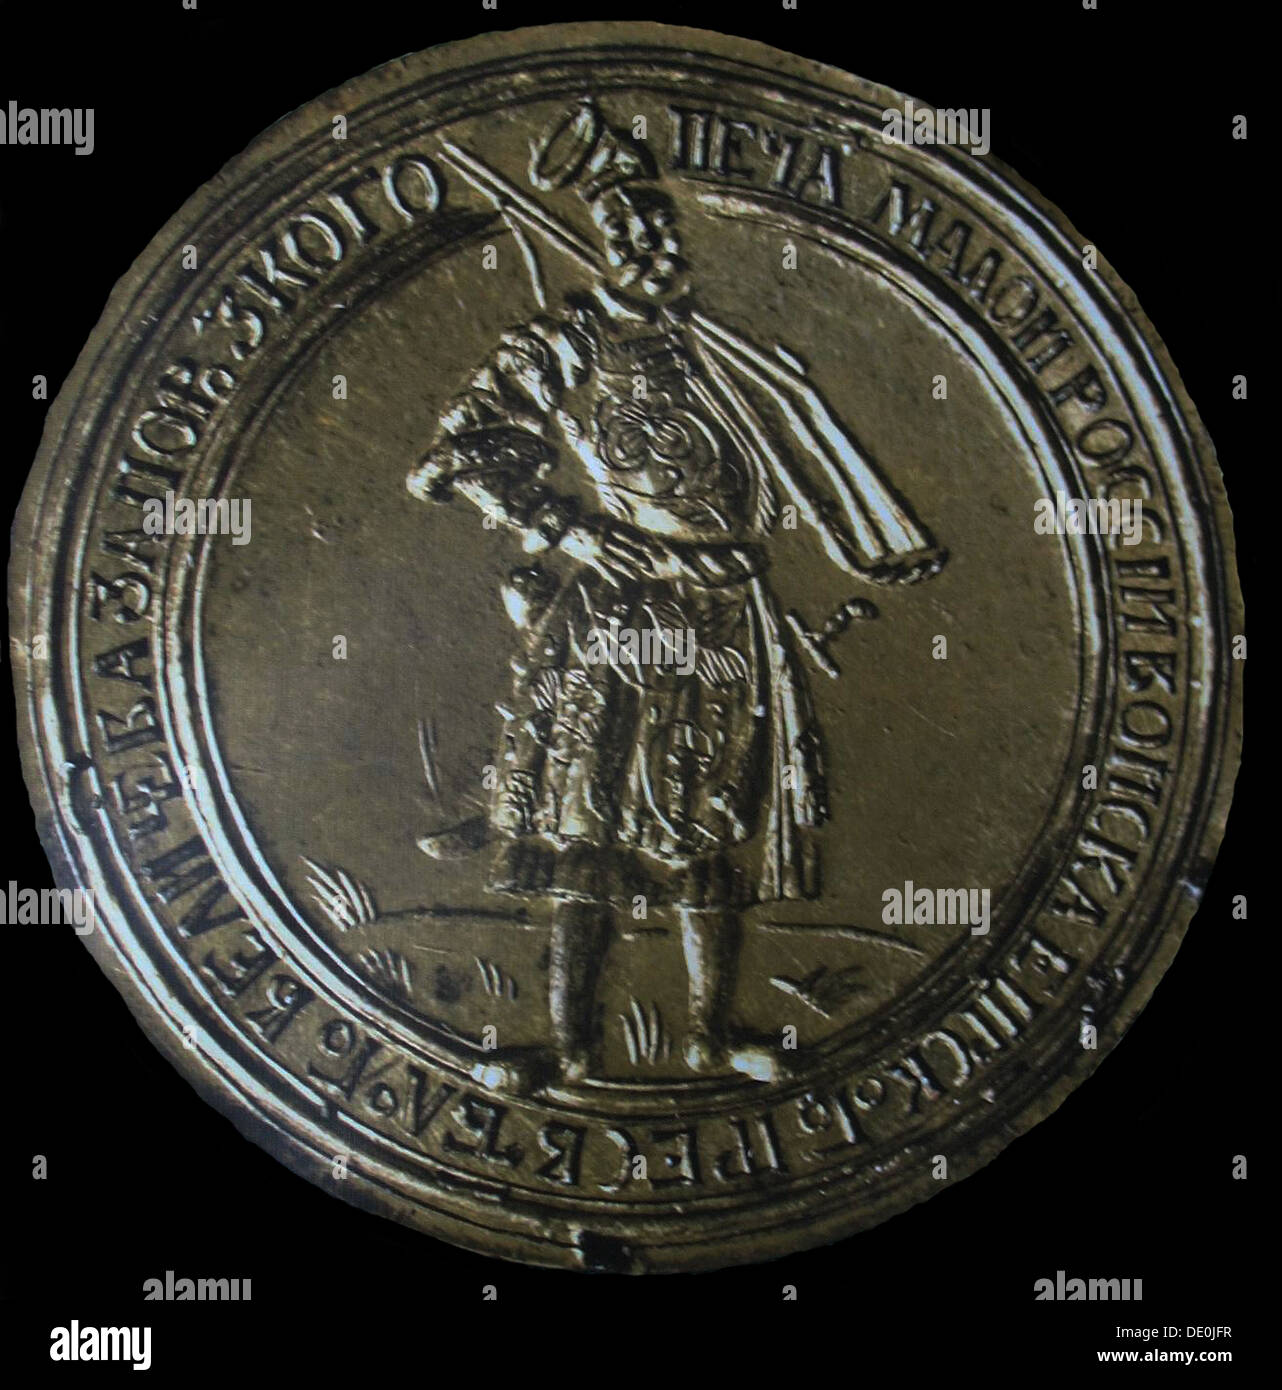 El sello de Ivan Mazeppa, siglo XVII. Artista: objetos de la historia Foto de stock